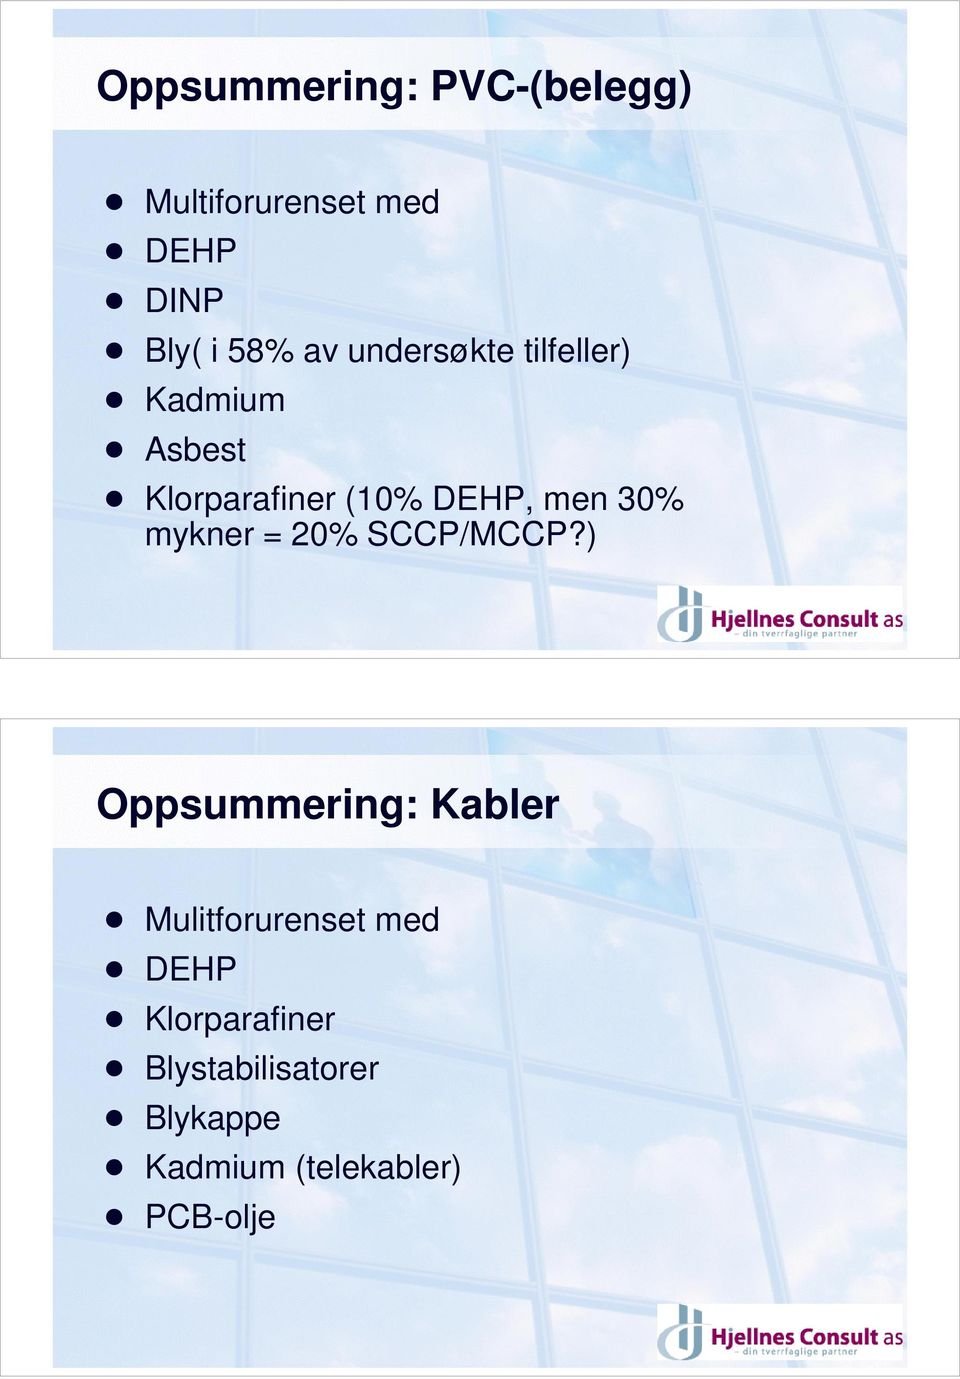 Klorparafiner (10% DEHP, men 30% mykner = 20% SCCP/MCCP?